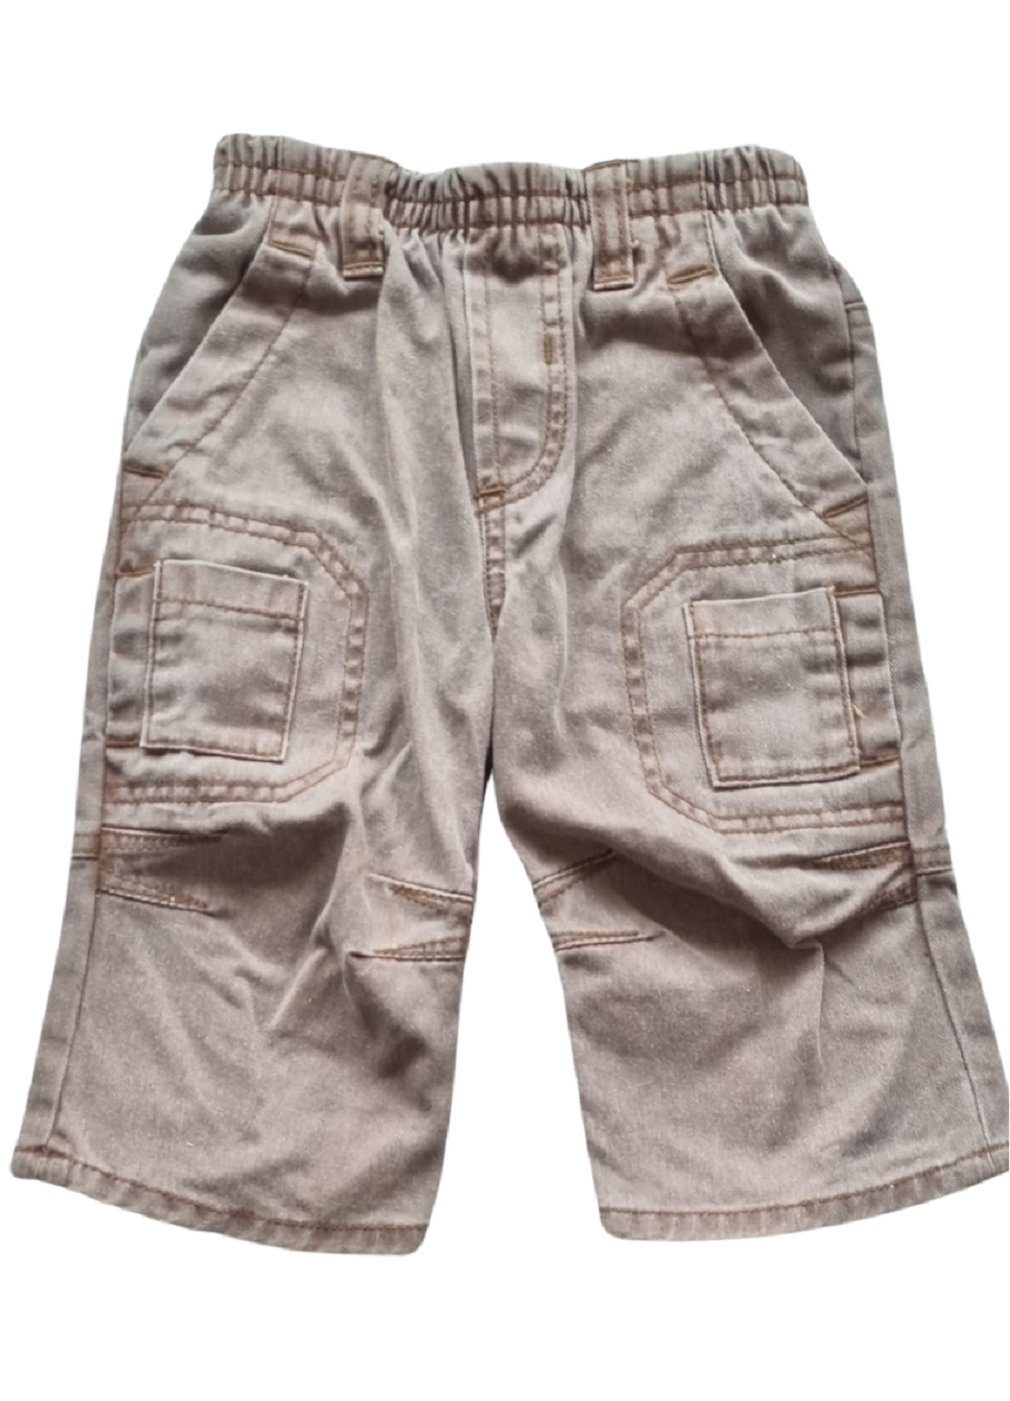 Disney 5-Pocket-Jeans 62 - Winnie 23405 Disney braun Größe Baby